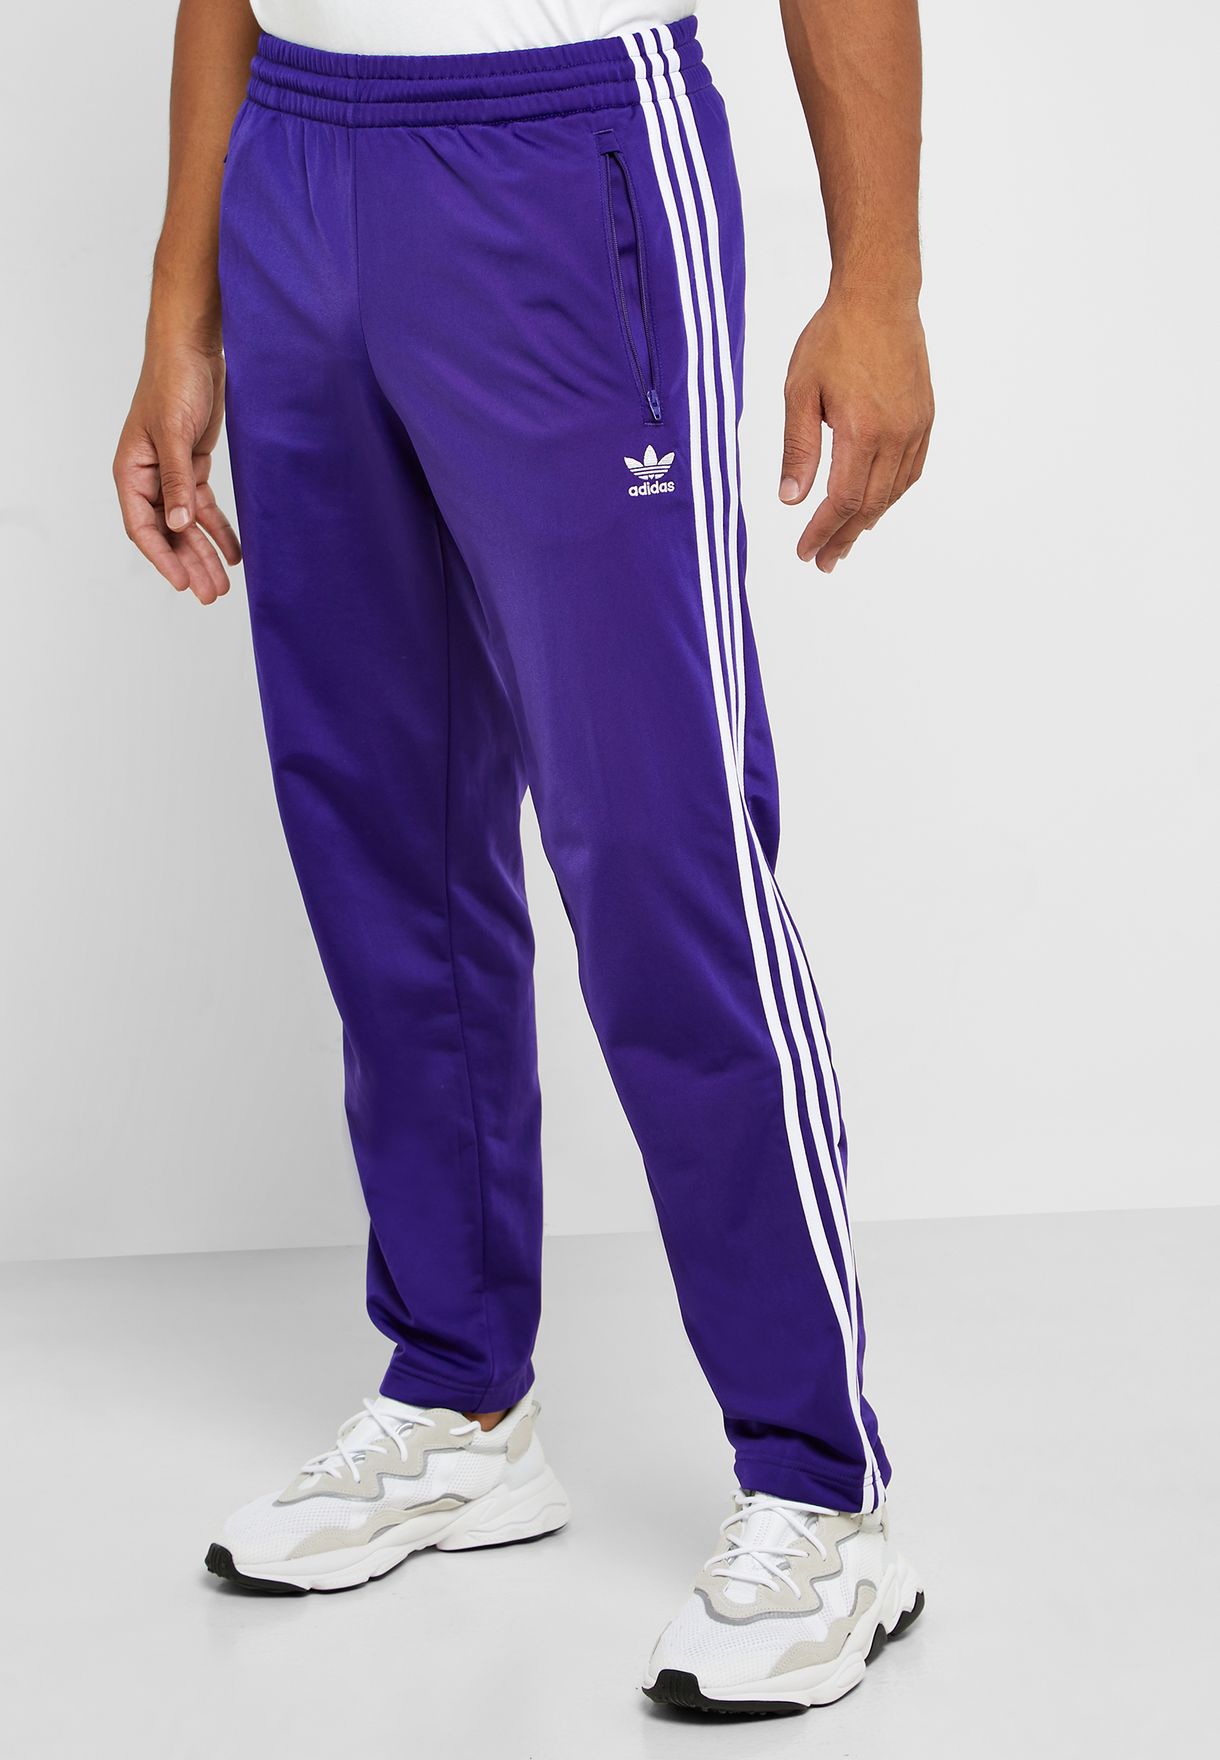 adidas joggers purple